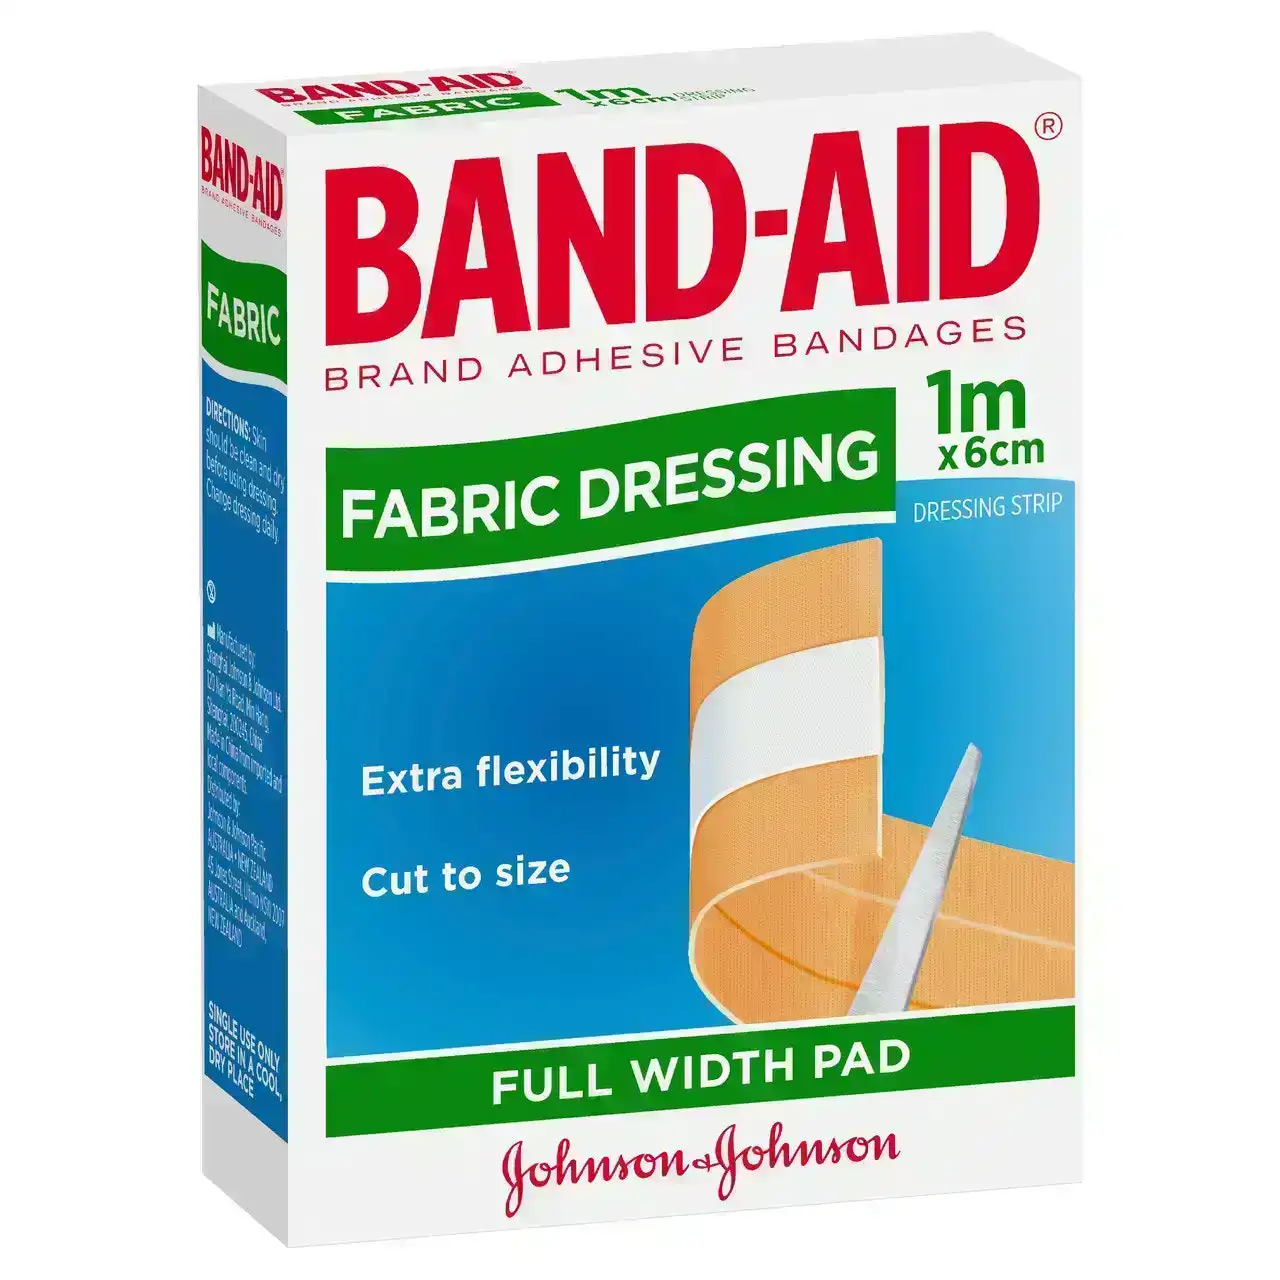 BAND-AID Fabric Dressing Full Width Pad 1m x 6cm